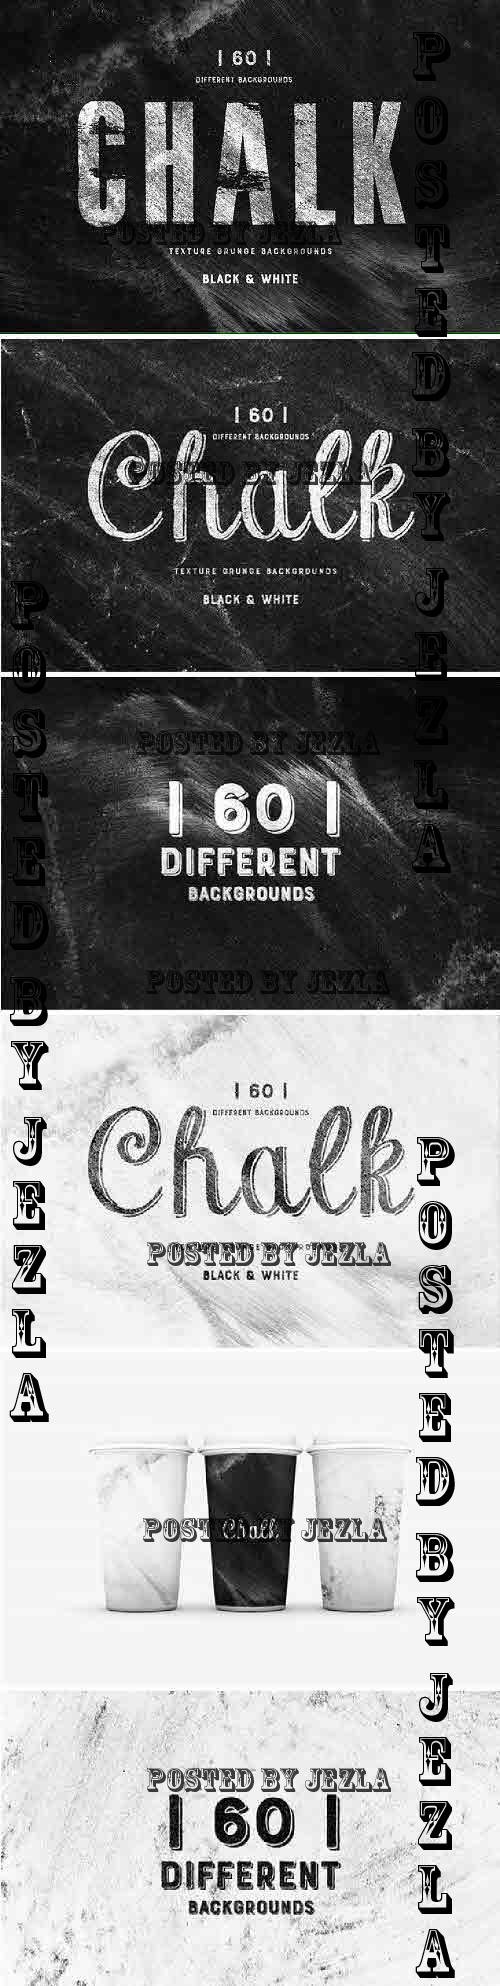 Chalk Texture Backgrounds - FGEPN8